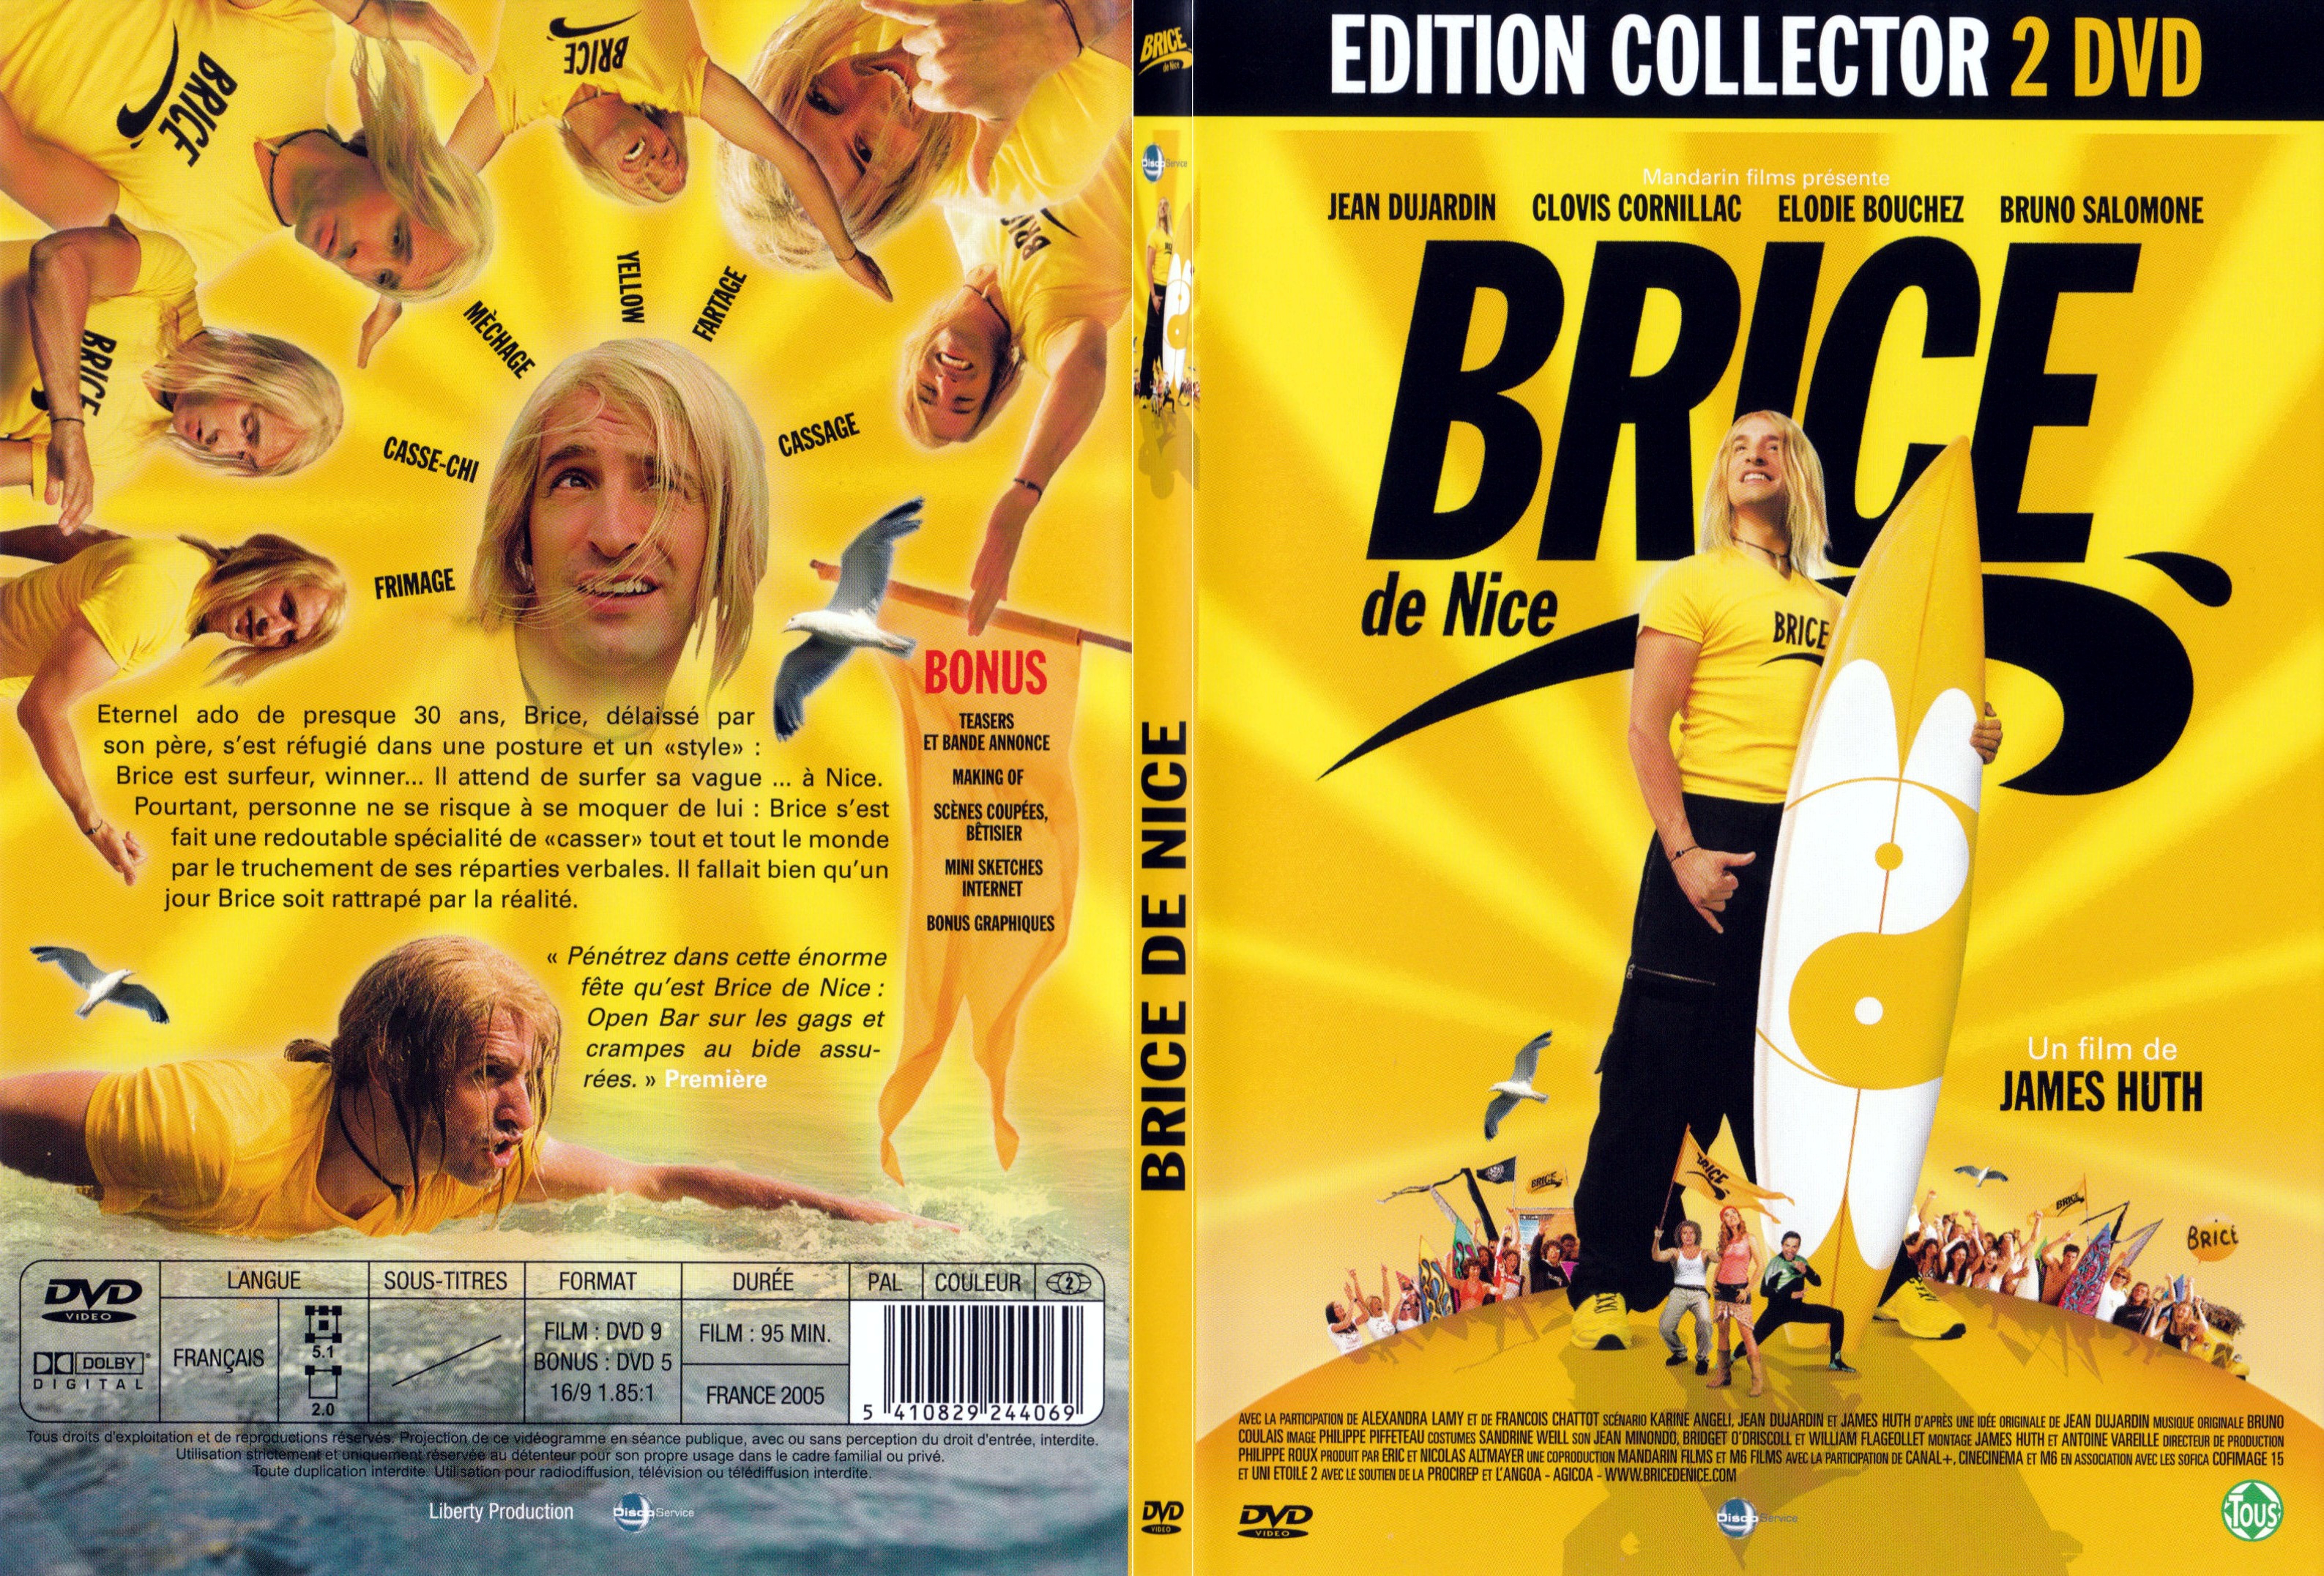 Jaquette DVD Brice de Nice - SLIM v3